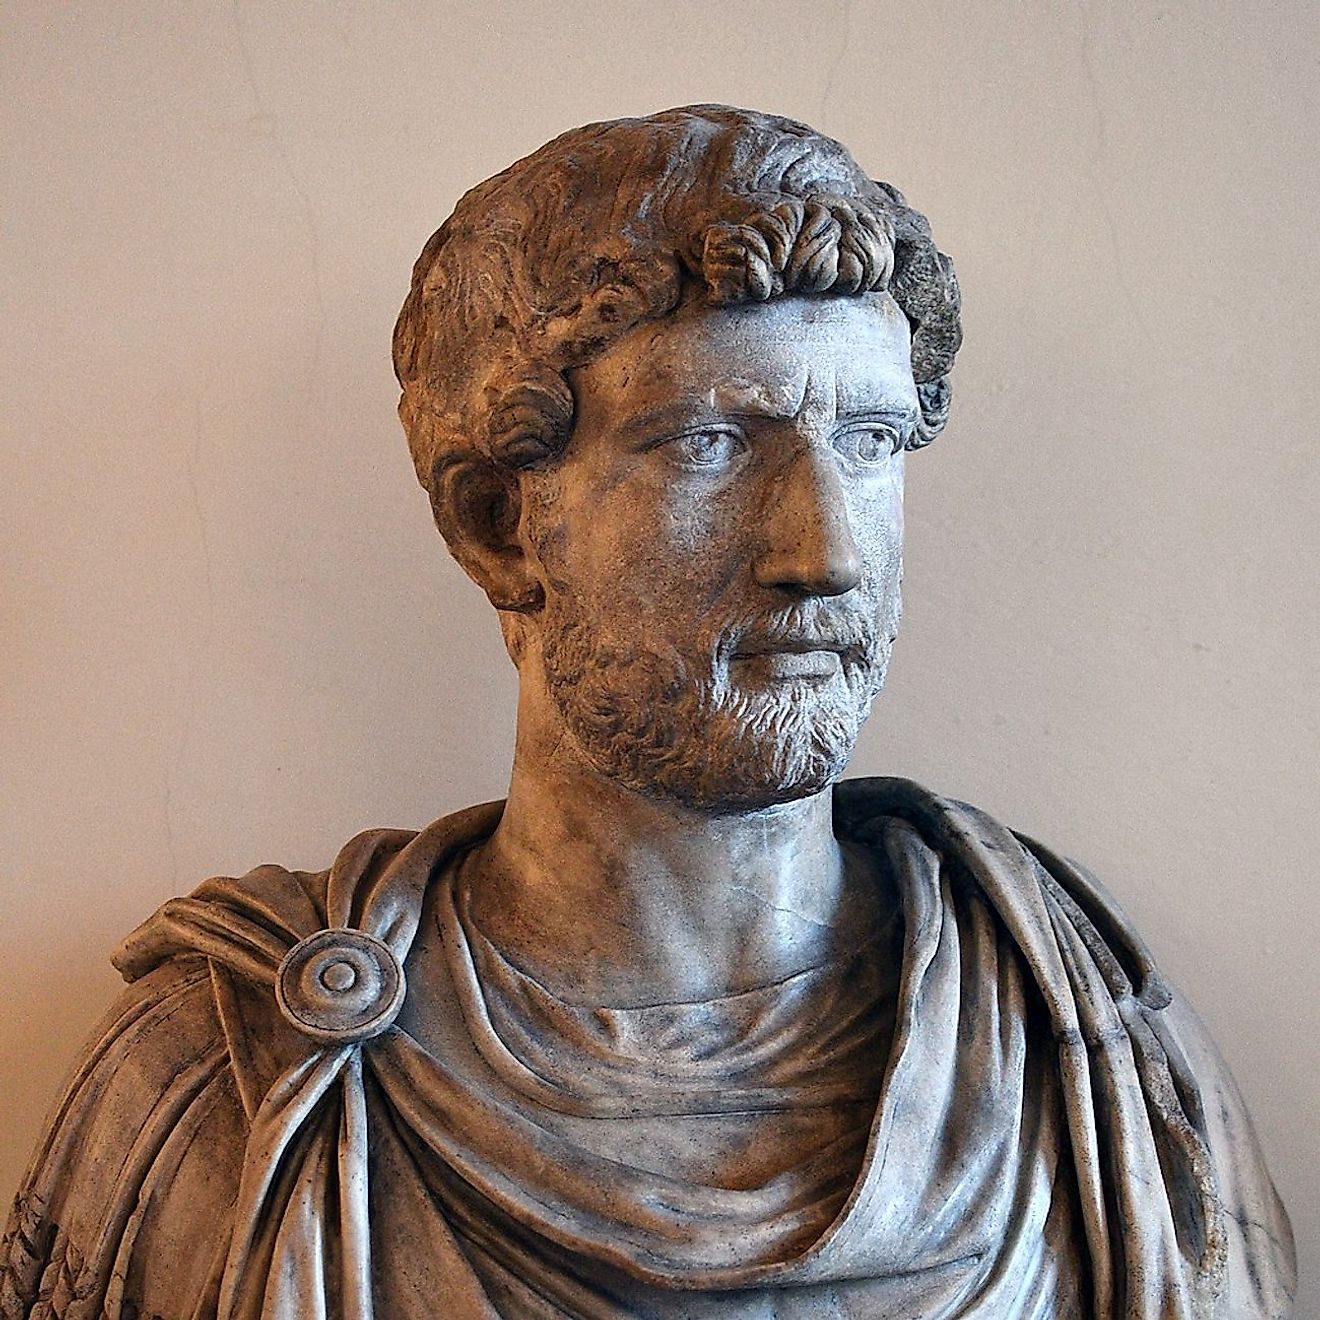 Sculpture of Hadrianus in Venice. Image credit: Livioandronico2013/Wikimedia.org